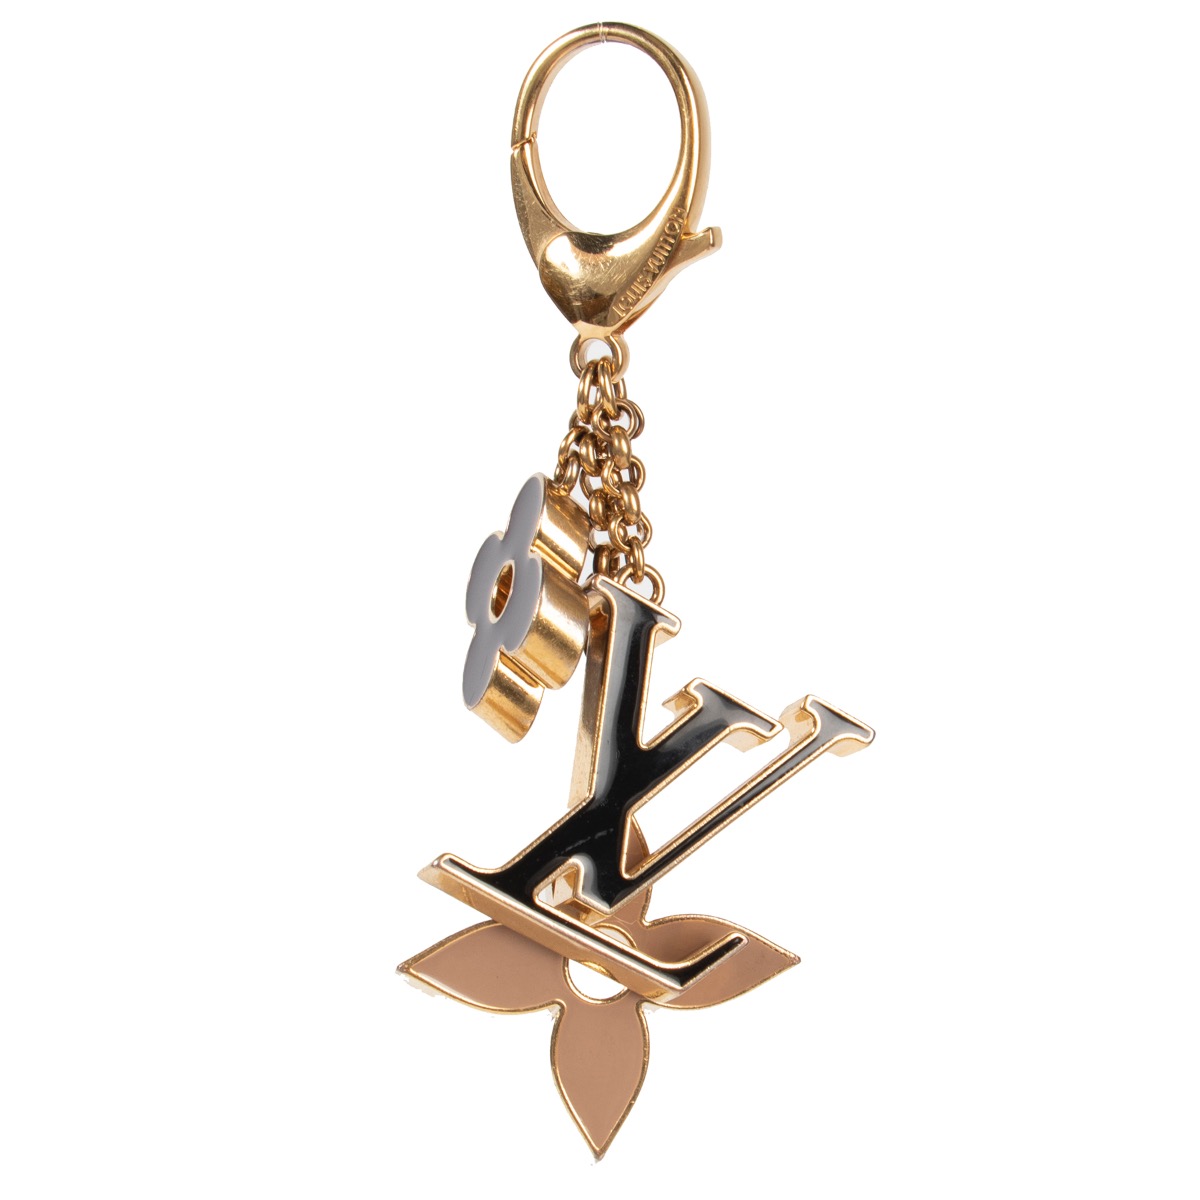 Louis Vuitton Key Chain Bag Charm - 8 For Sale on 1stDibs